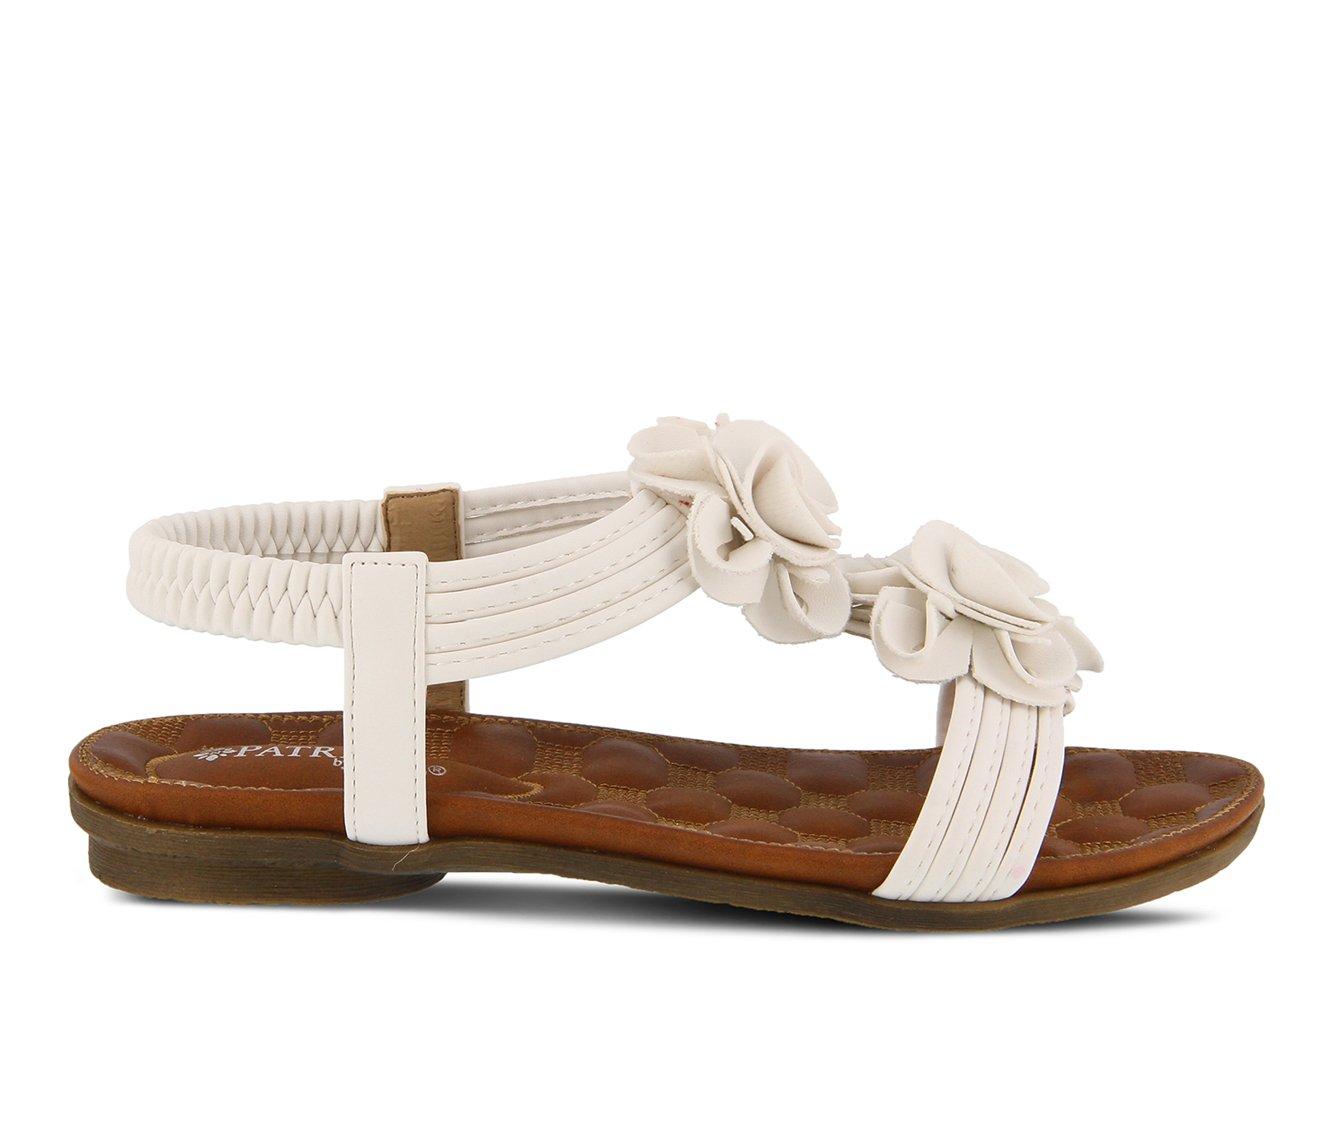 Women's Patrizia Nectarine Flat Sandals